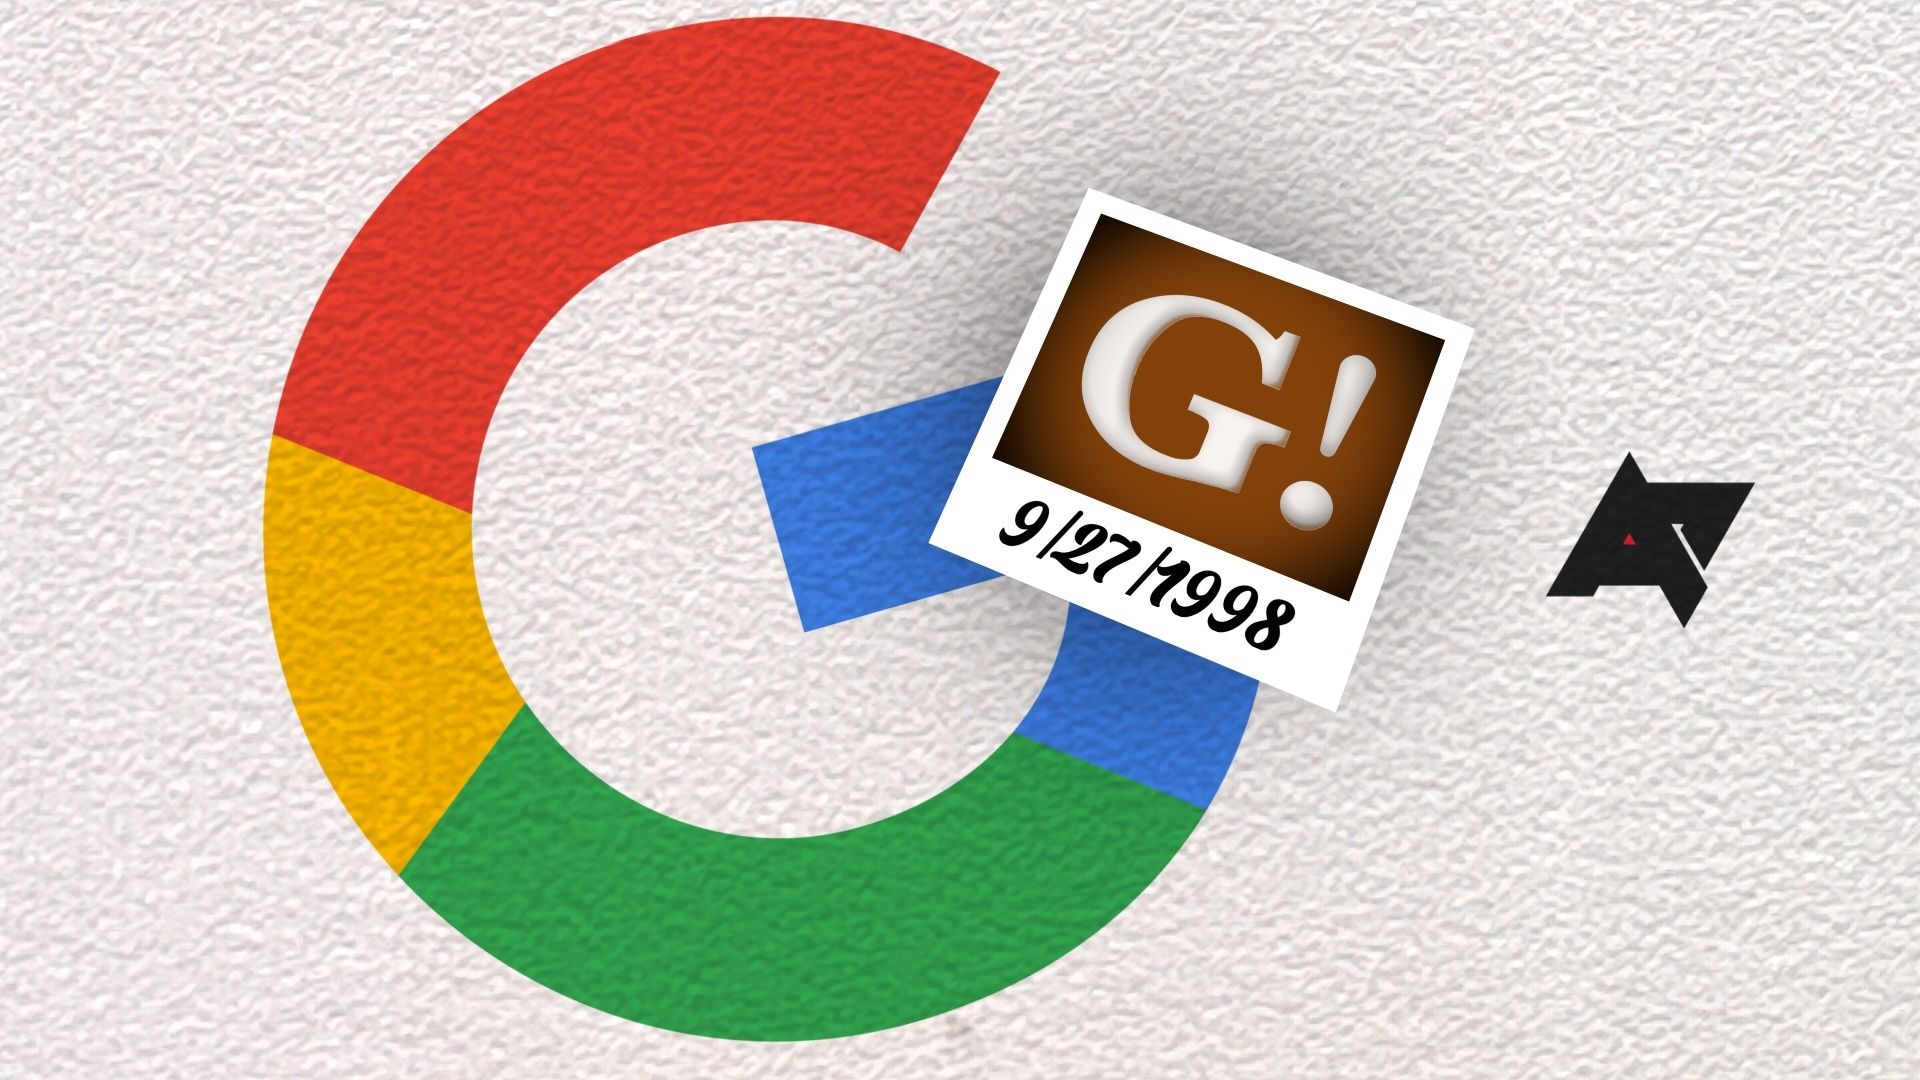 A collage of the Google logo, a polaroid-style 9/27/1998 photo of the old Google logo, and the Android Police logo on a grainy white background